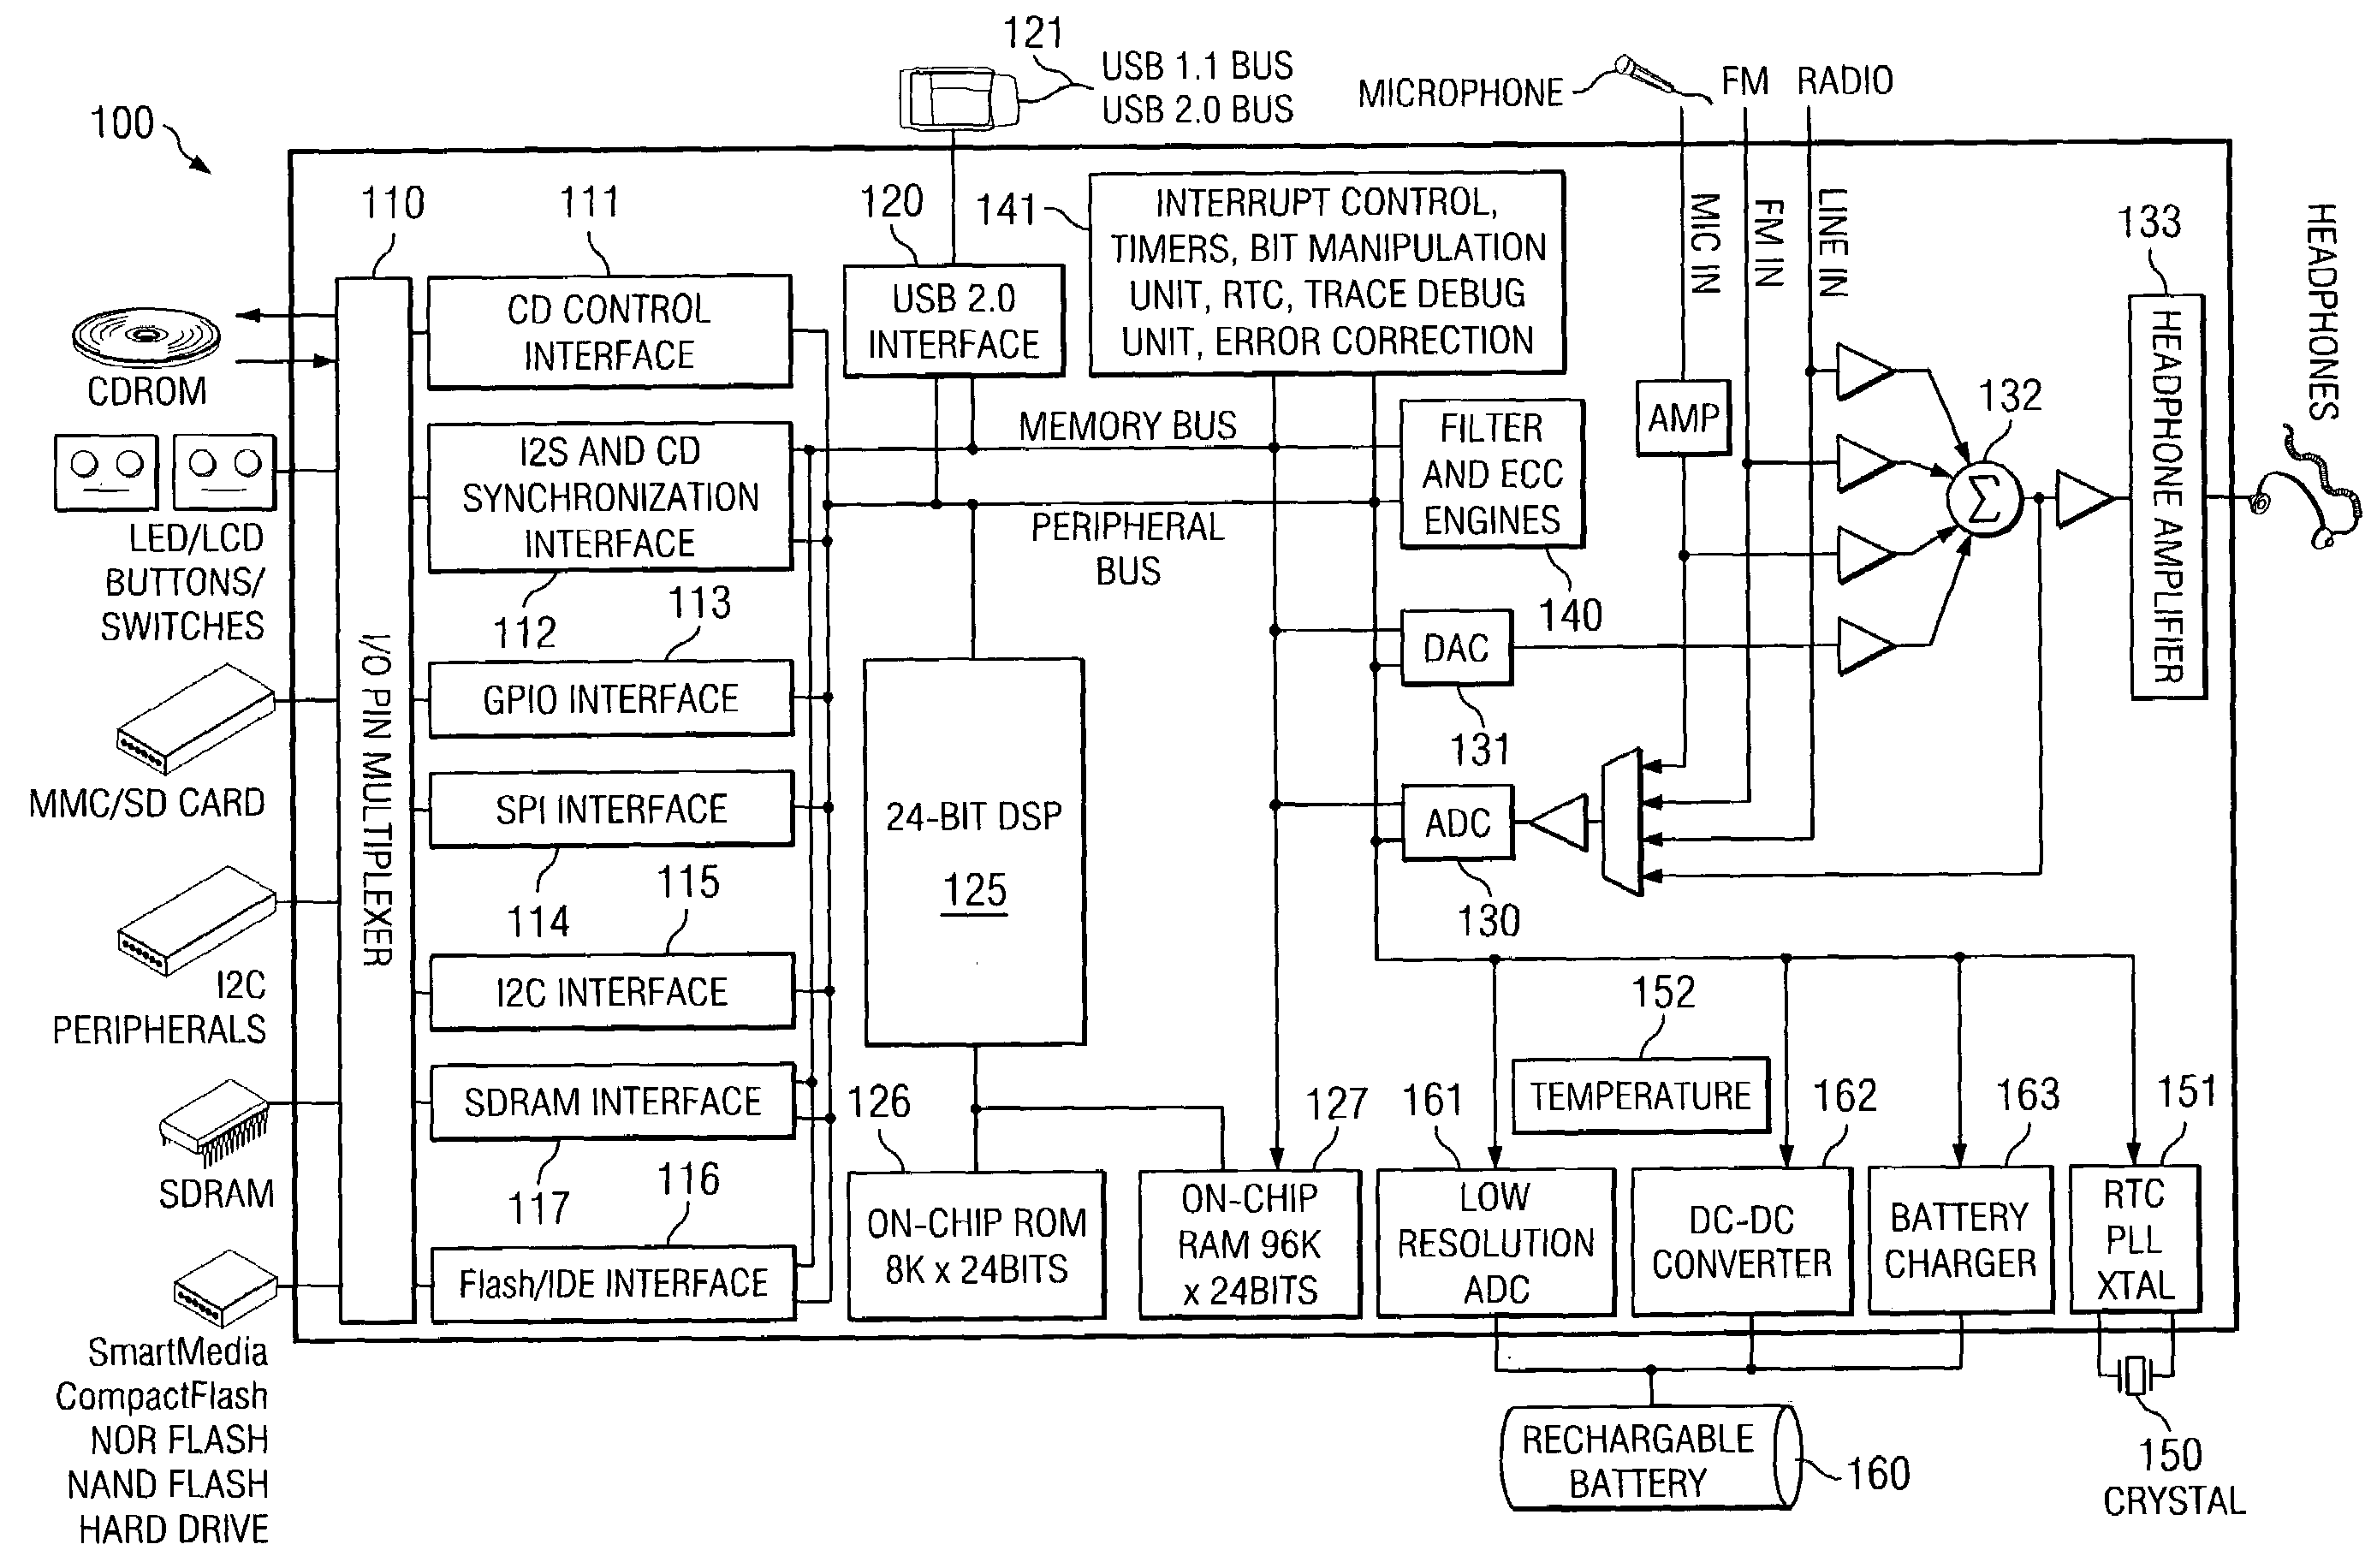 Pulse-skipping PFM DC-DC converter using a voltage mode control loop